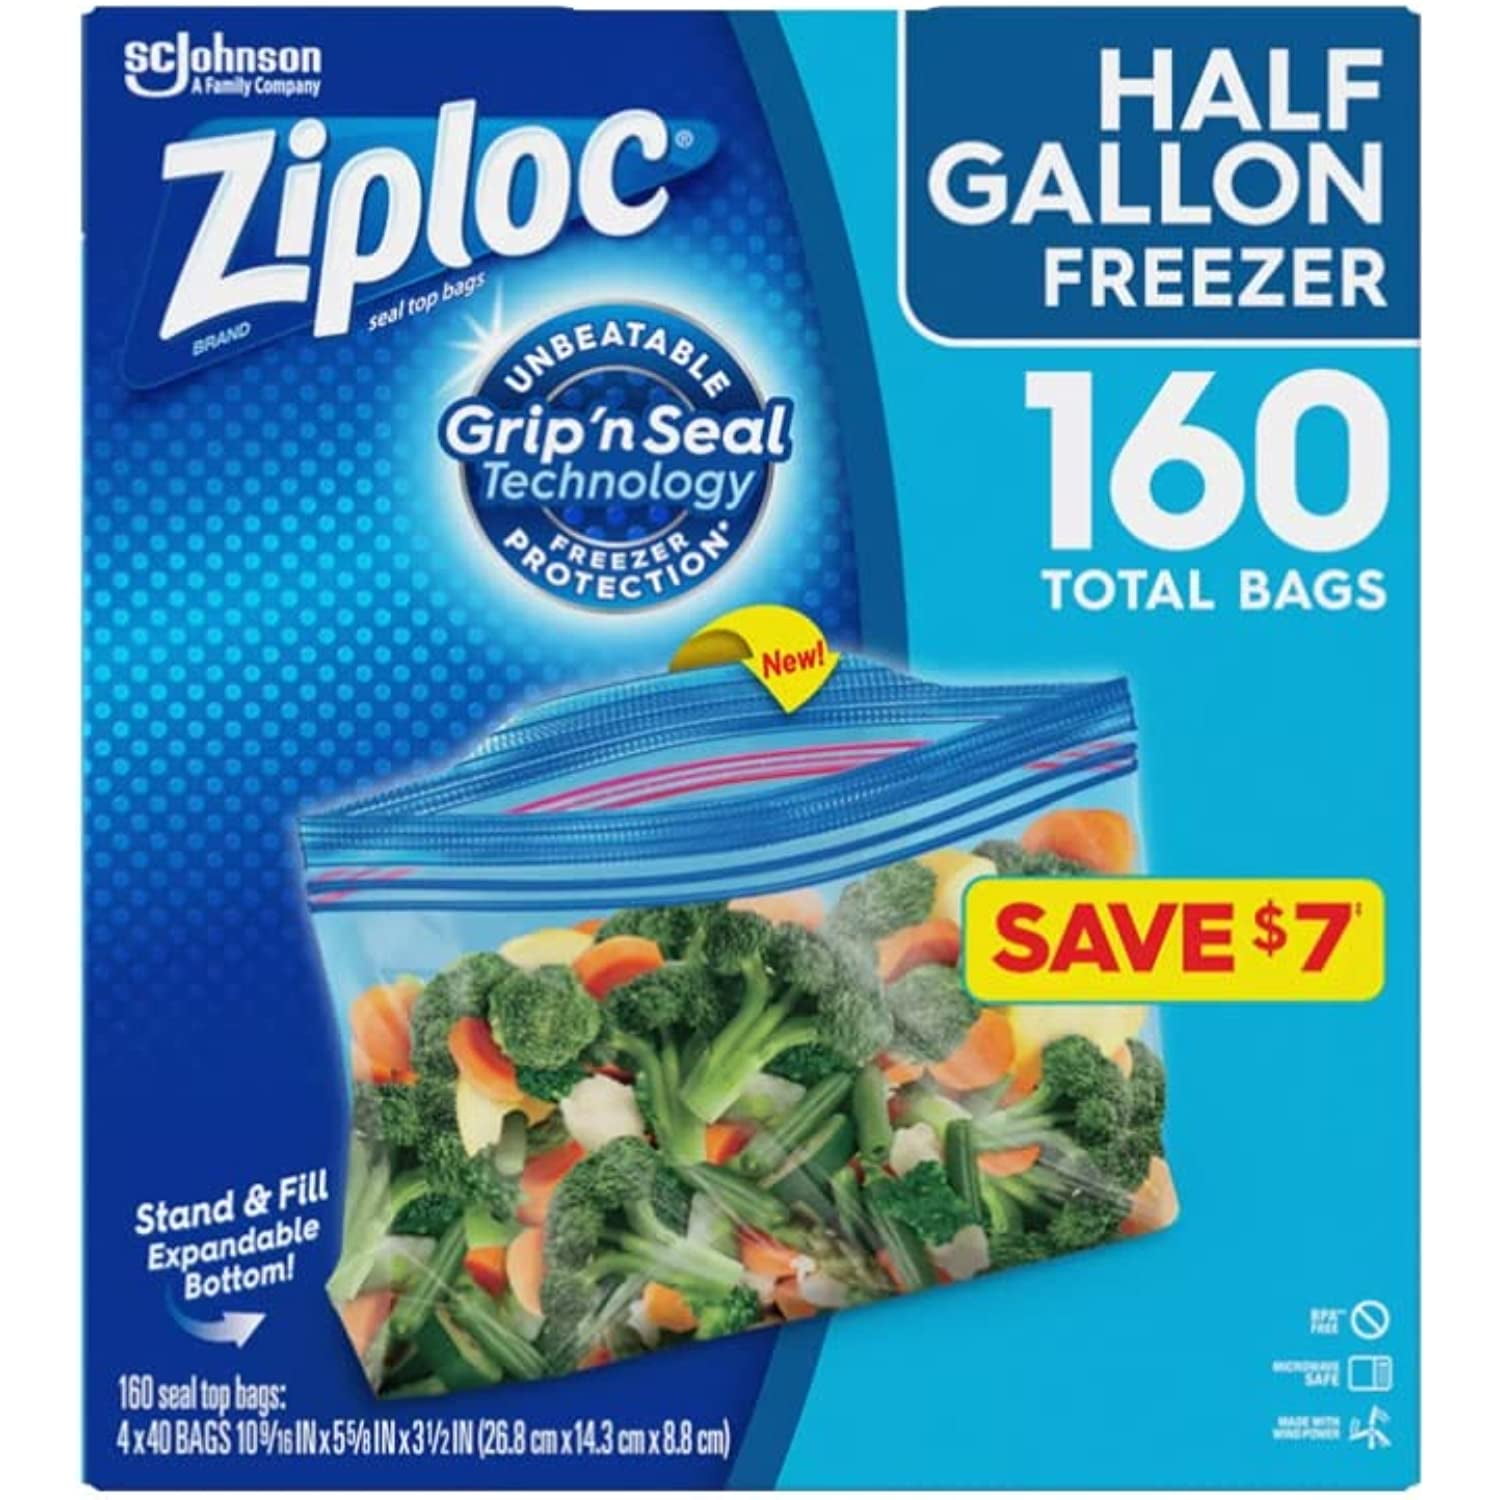 Ziploc Half Gallon Marinade Food Storage Bags for Meal Prep, Grip